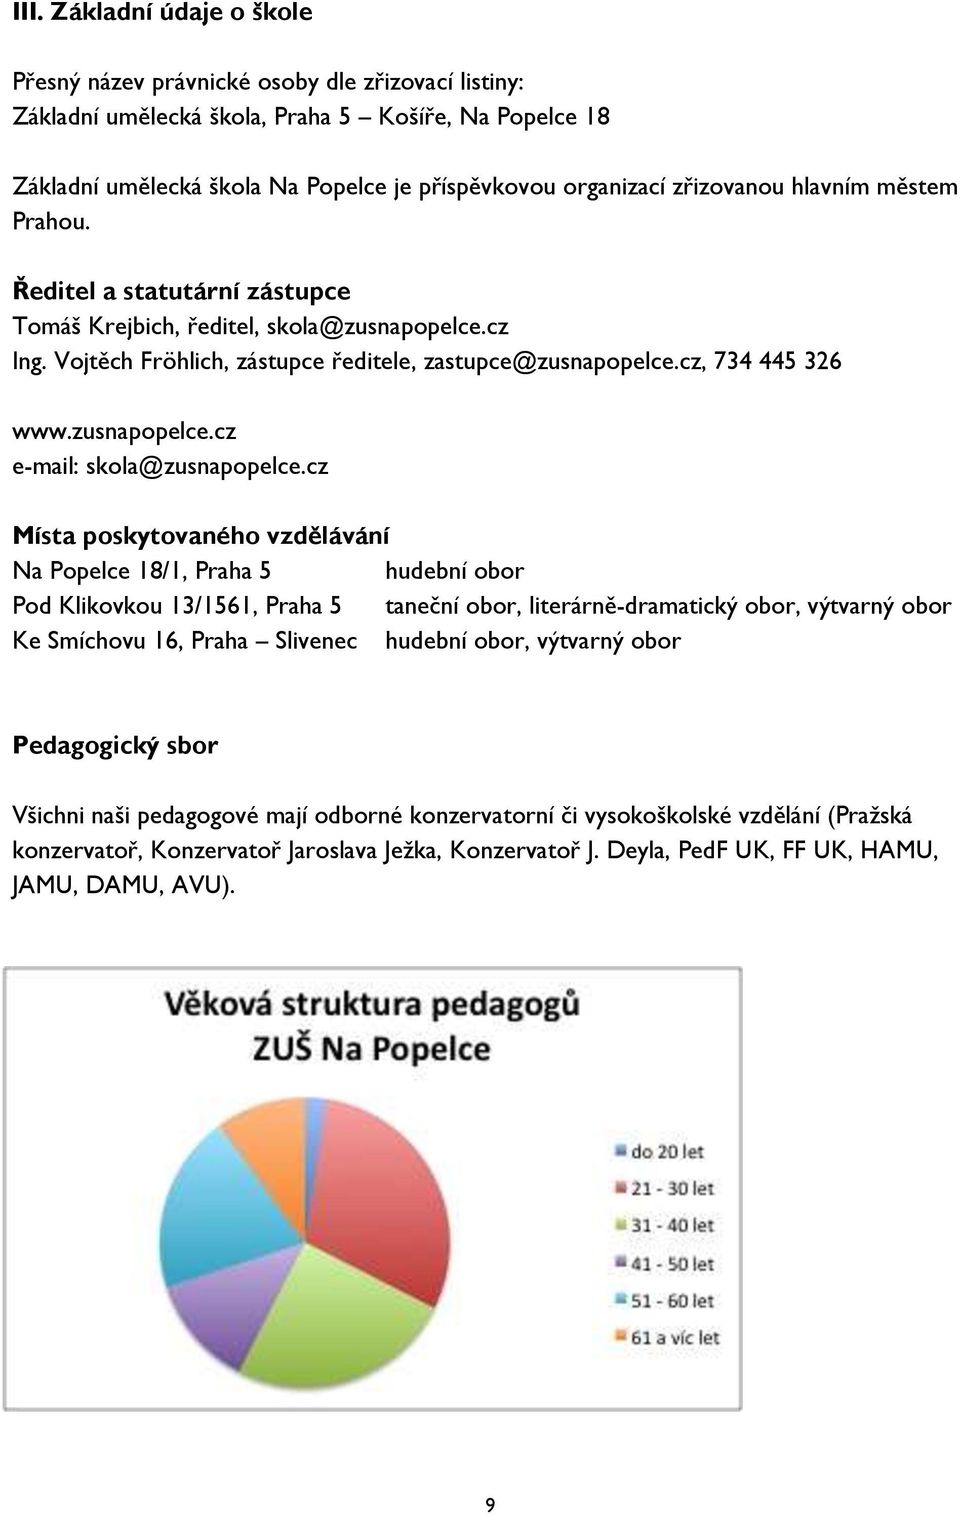 zusnapopelce.cz e-mail: skola@zusnapopelce.